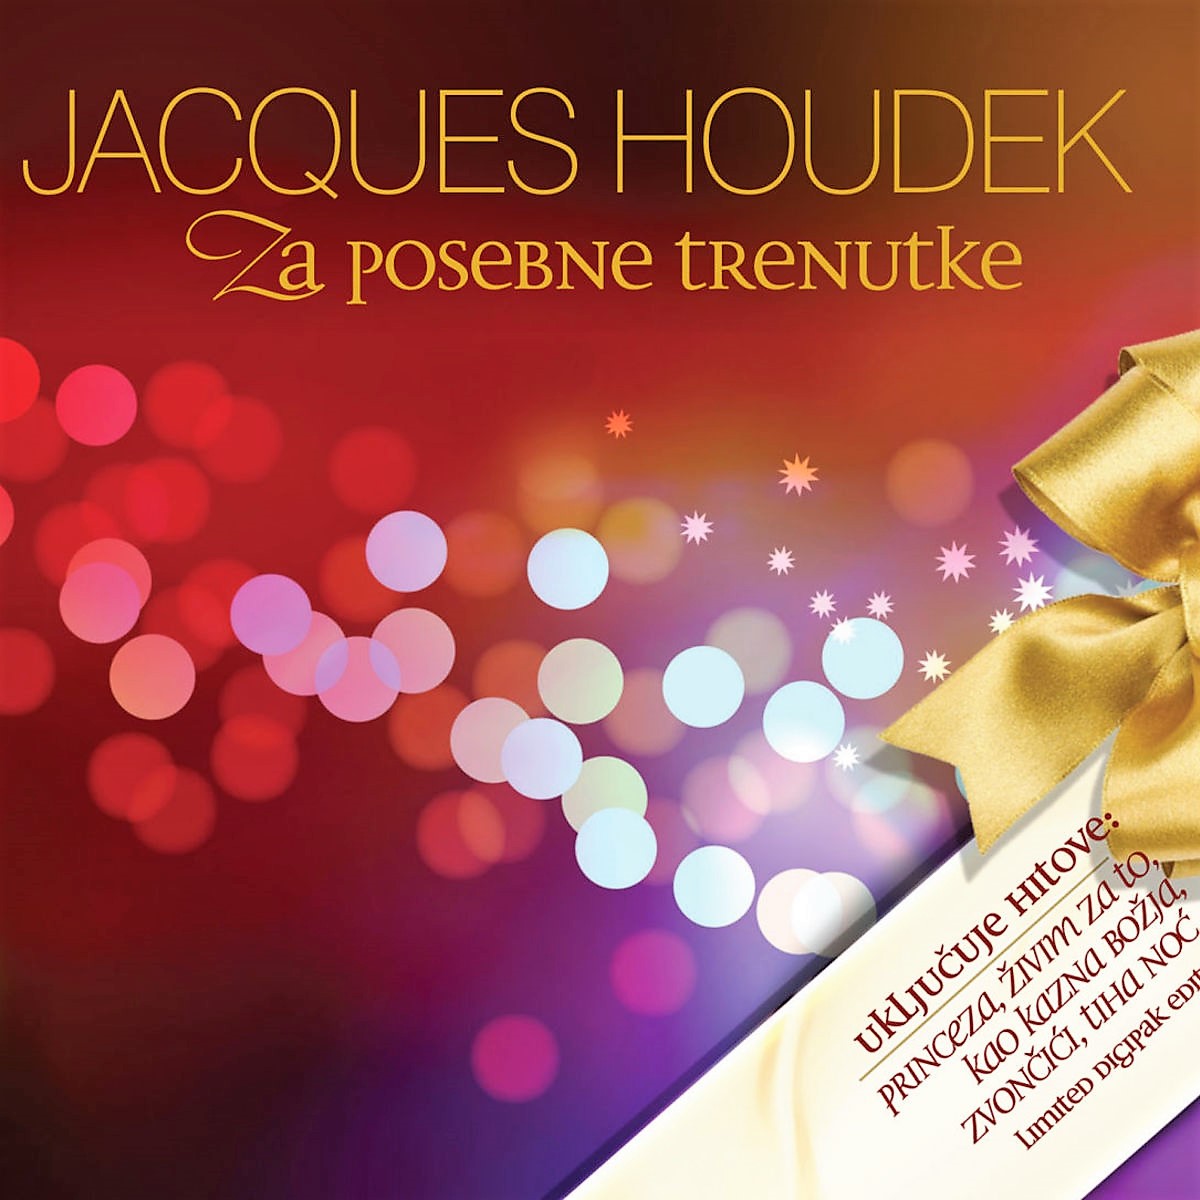 Jacques Houdek Coverp6fog